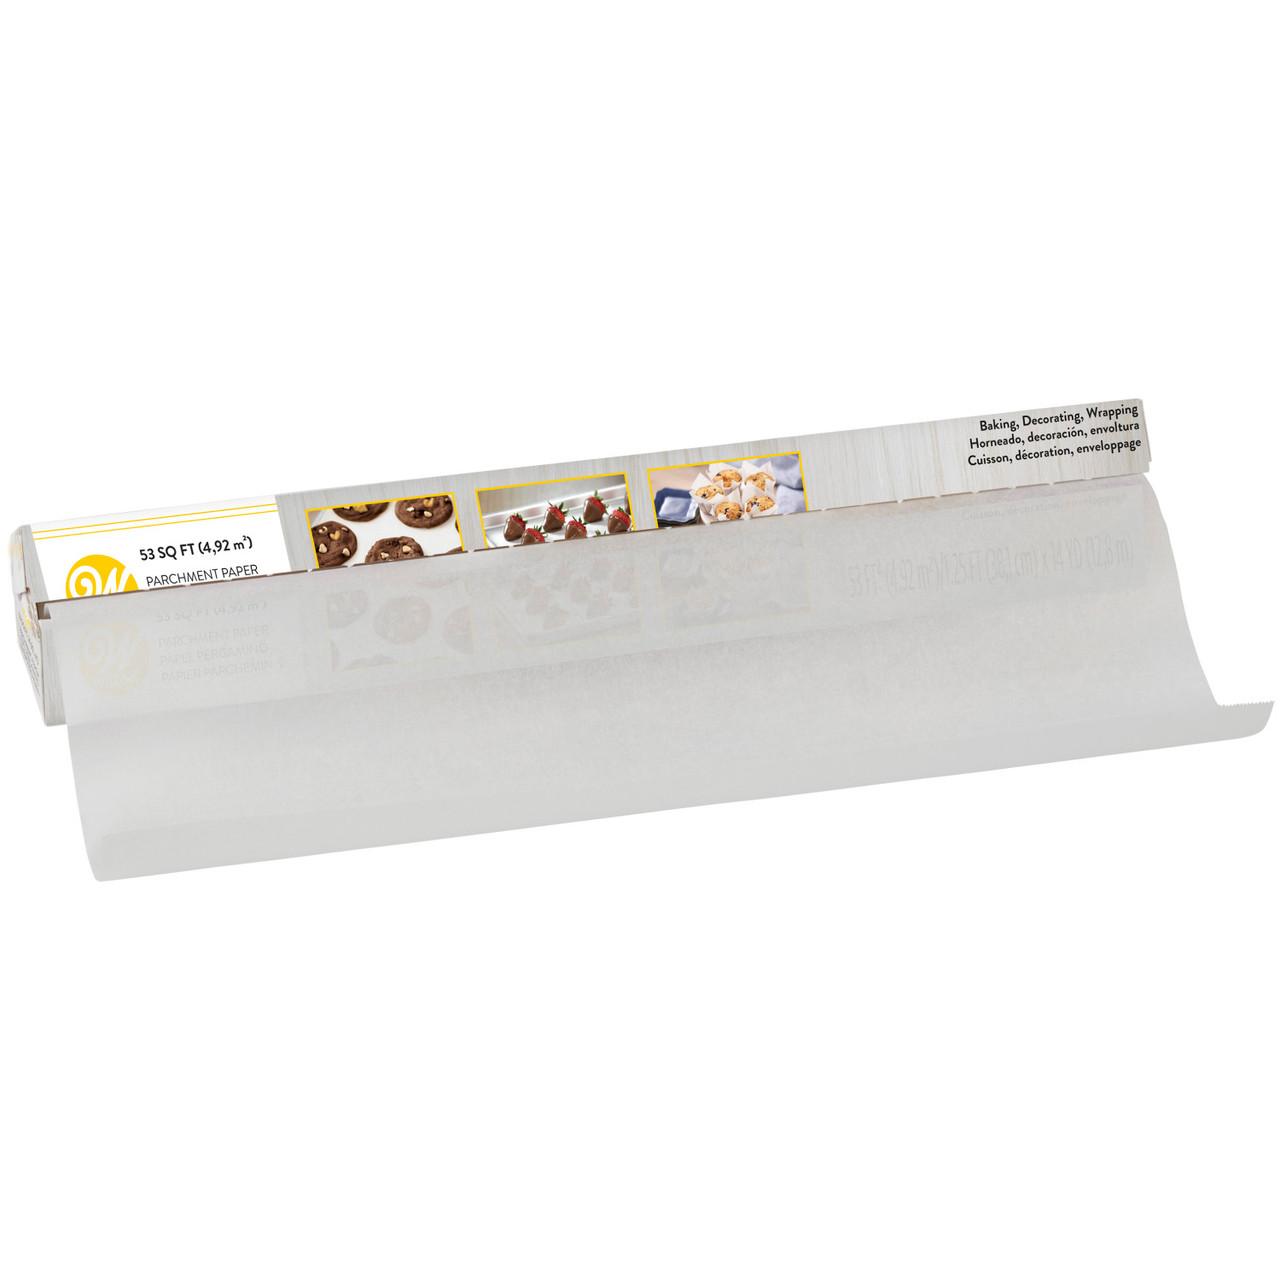 8m Parchment Paper Roll for Baking Non-stick Oil Paper Wax Paper